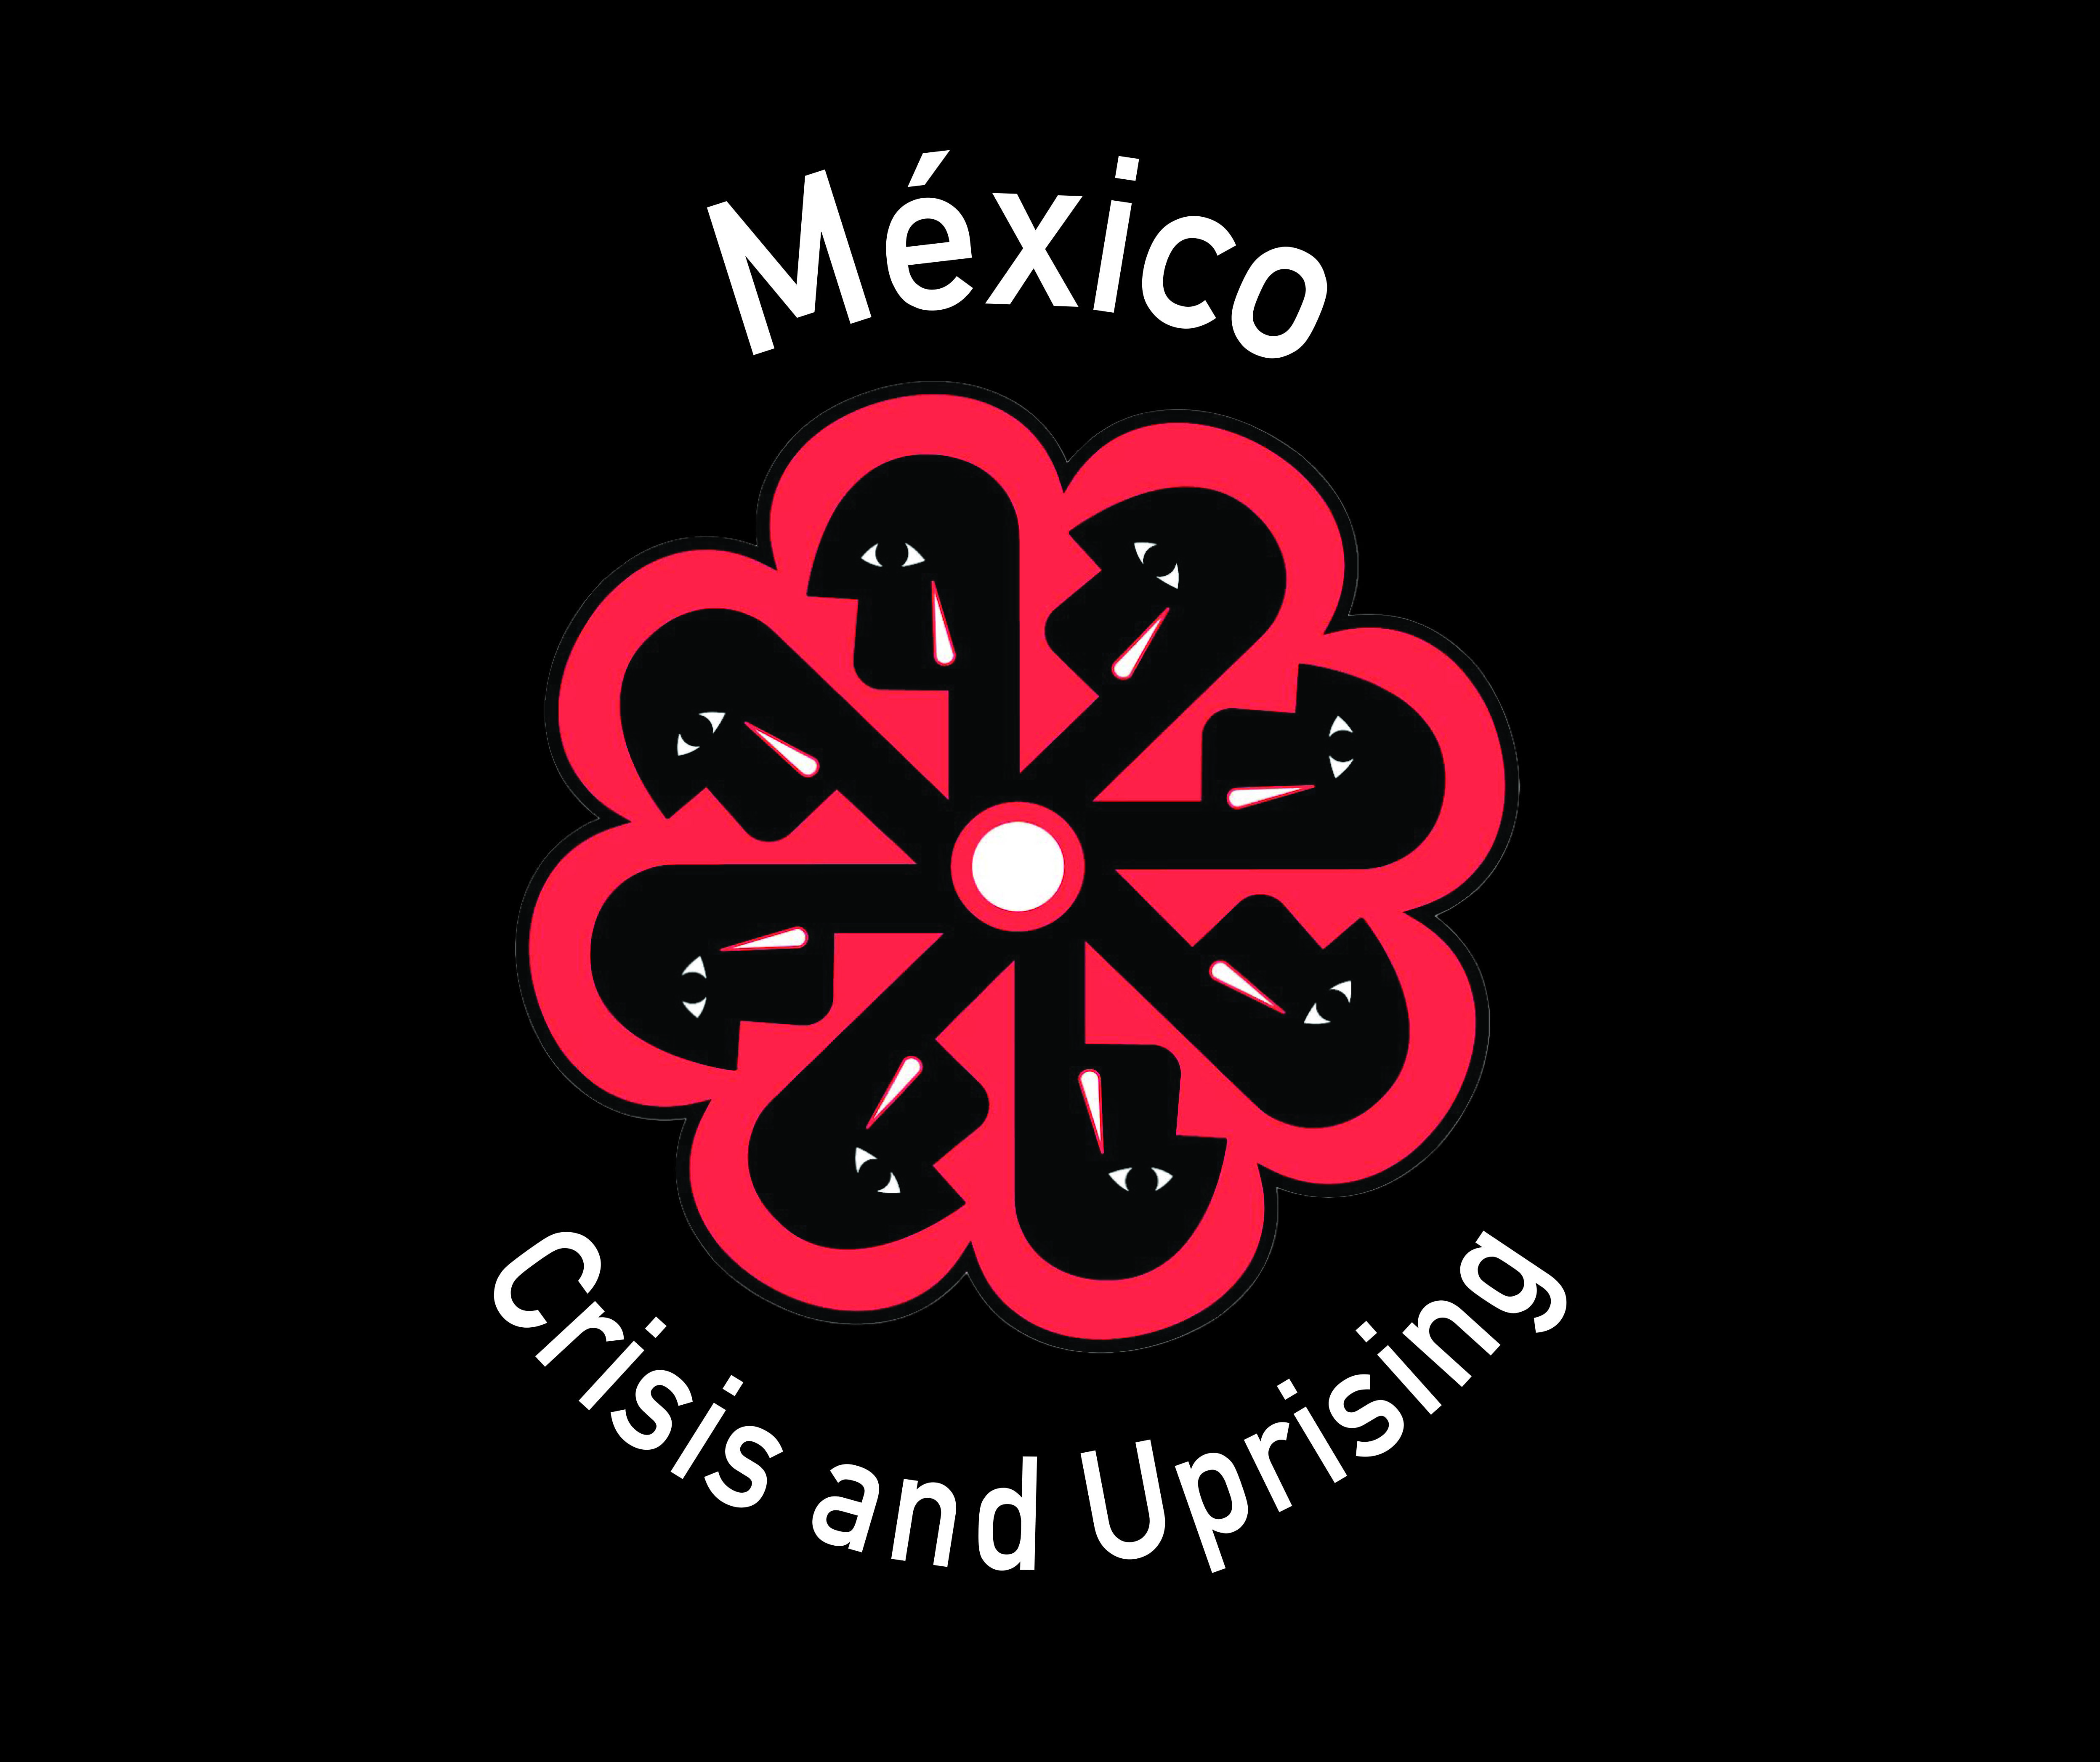 Mex-crisis-website-image.jpg